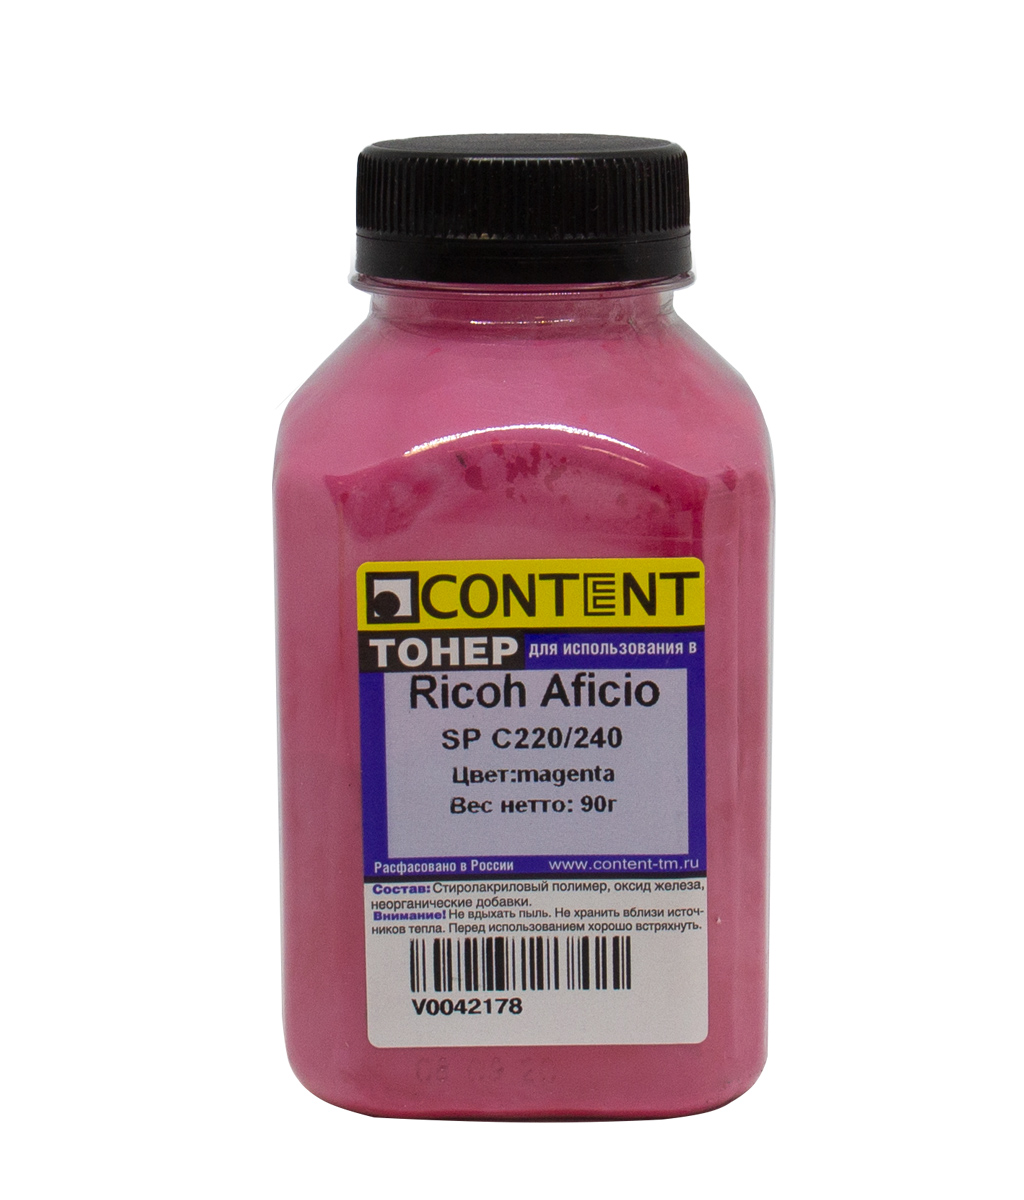 Тонер Content, бутыль 90 г, пурпурный, совместимый для Ricoh 407644/407545 Aficio SP C220N/221N/222DN/240DN/240SF/250DN/260DN/261DNw (V0042178)